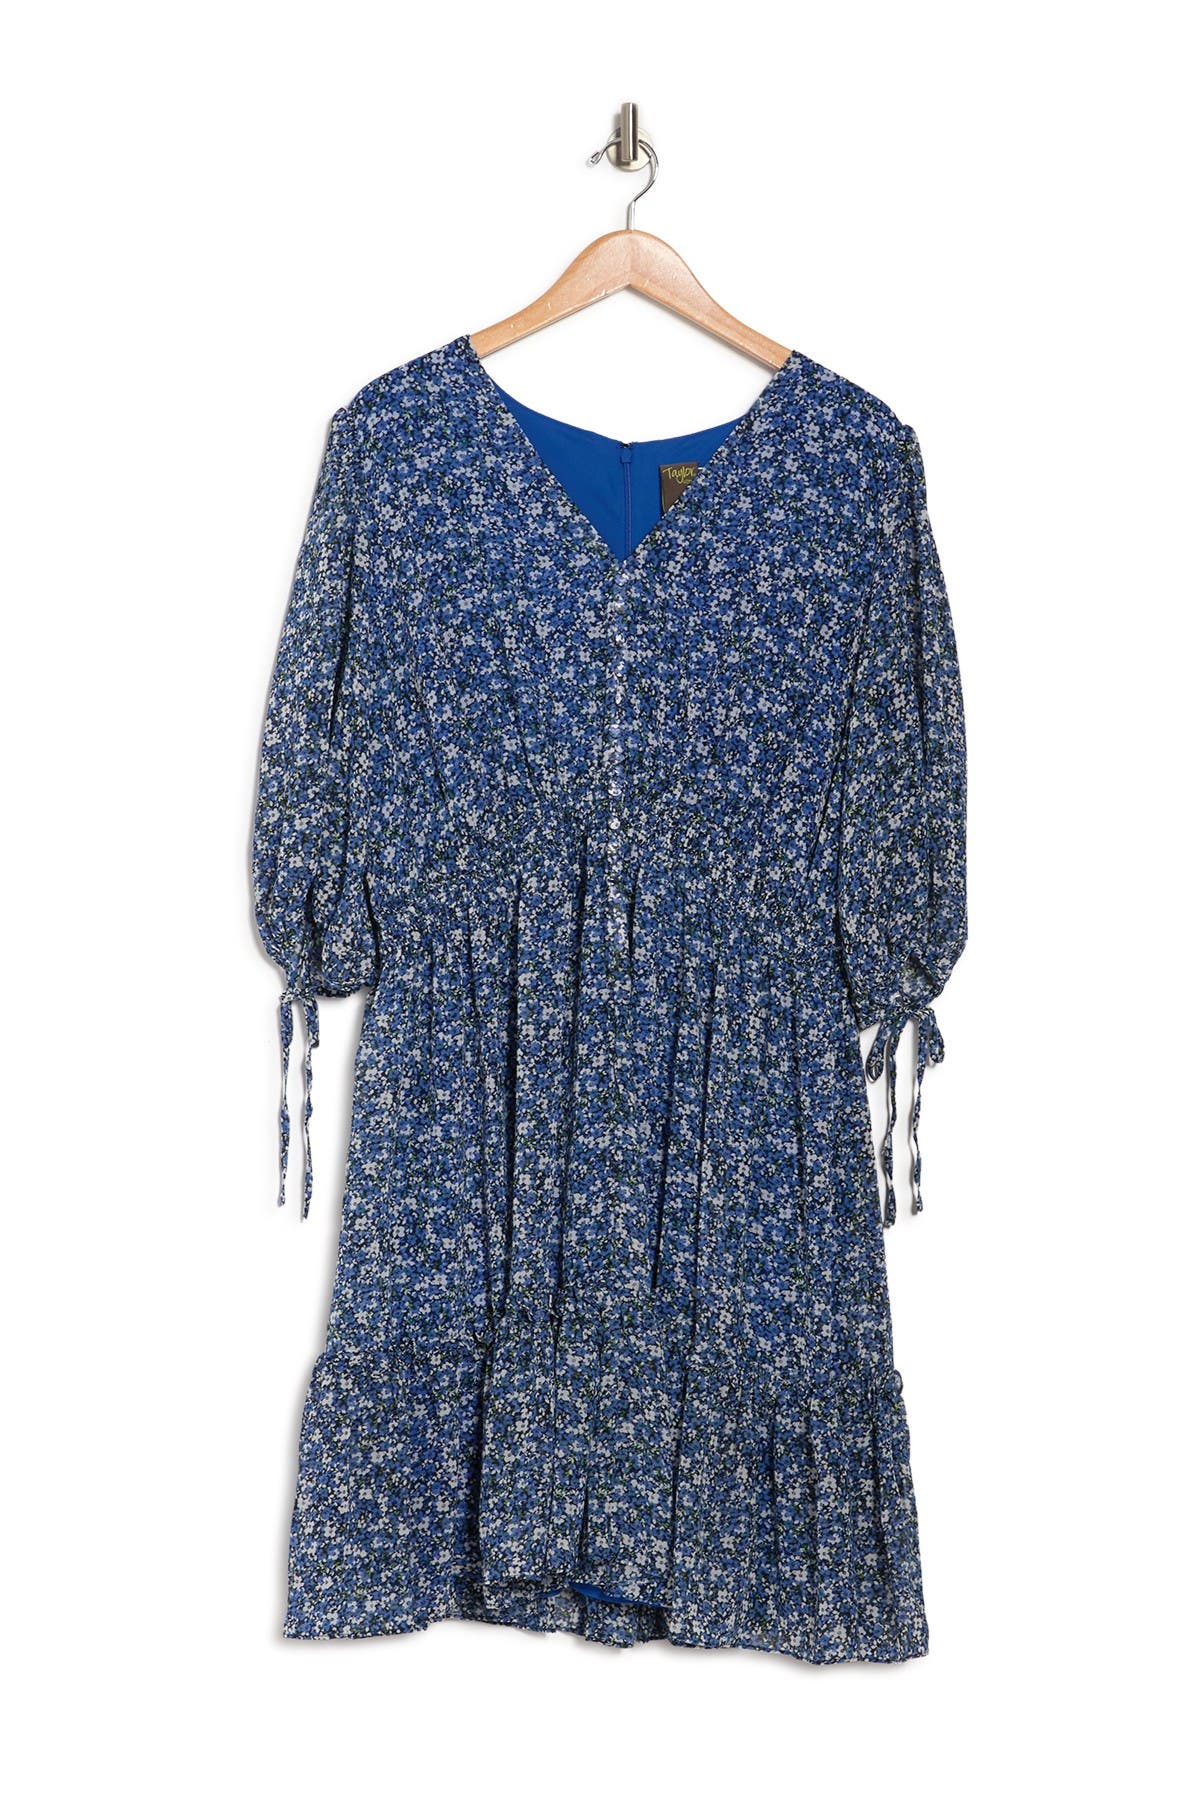 Taylor 3/4 Puff Sleeve Floral Print Dress In Navysky Bl